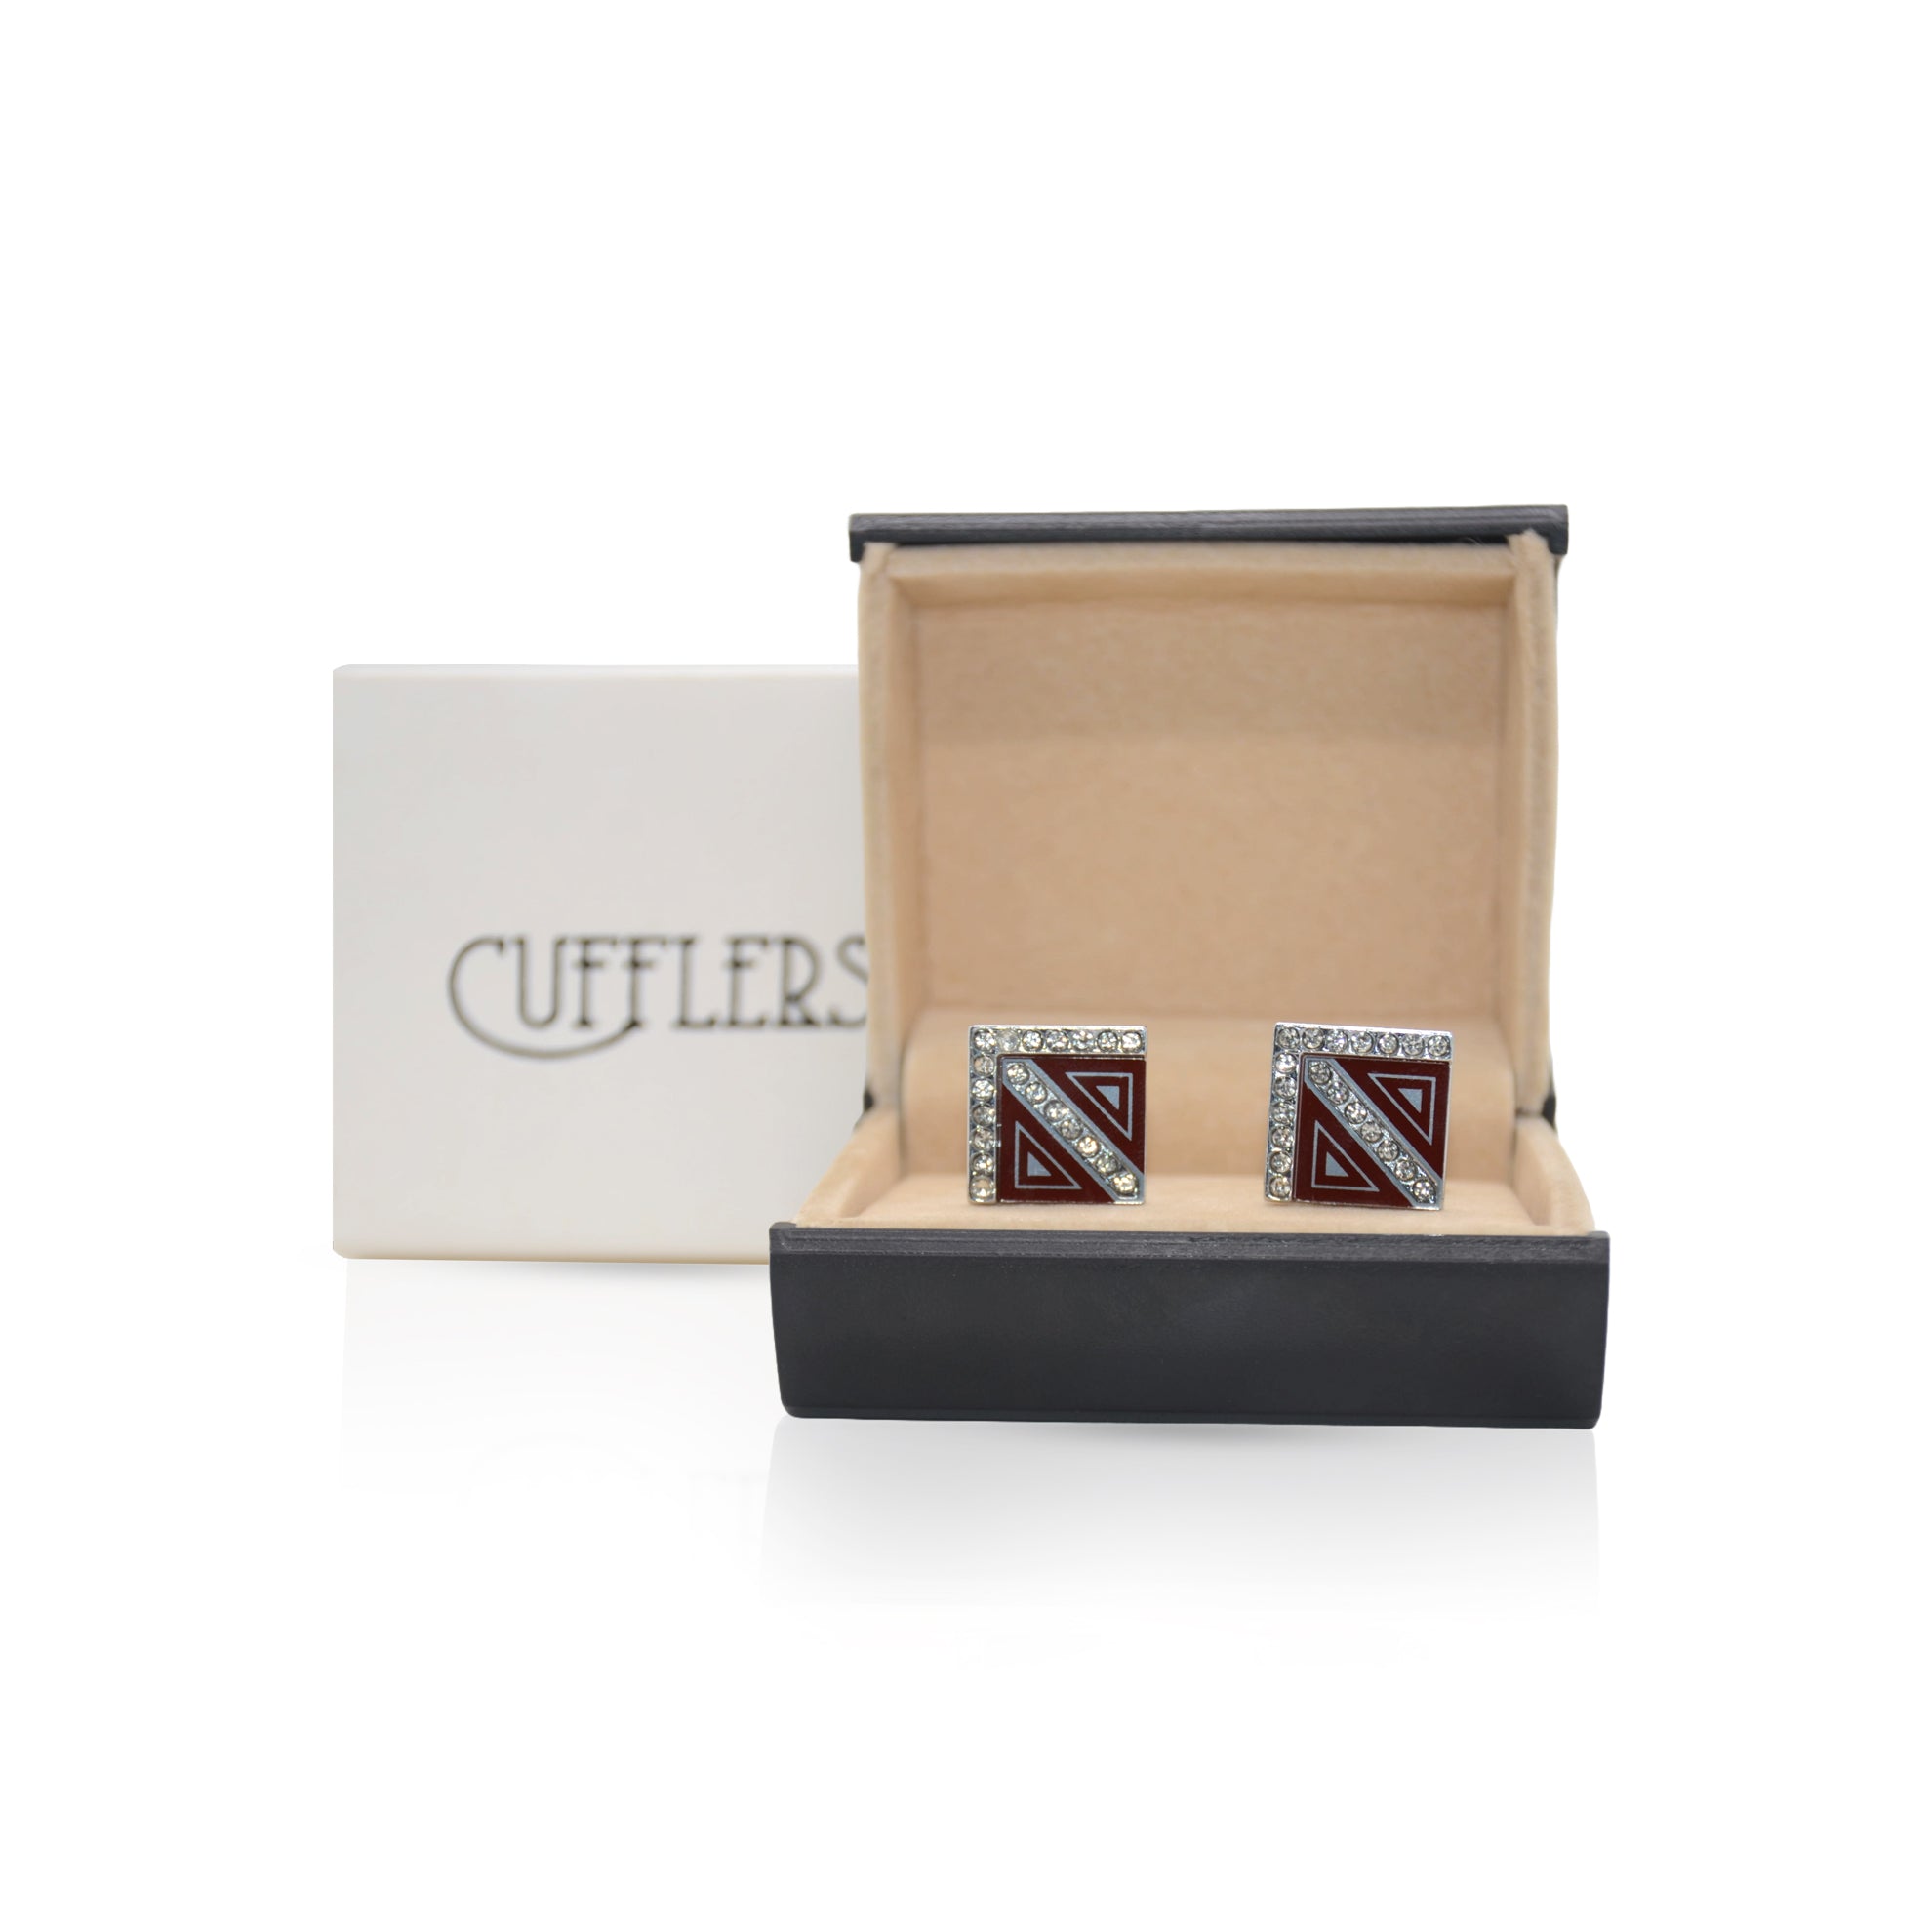 Cufflers Vintage Cufflinks Silver & Black with Free Gift Box